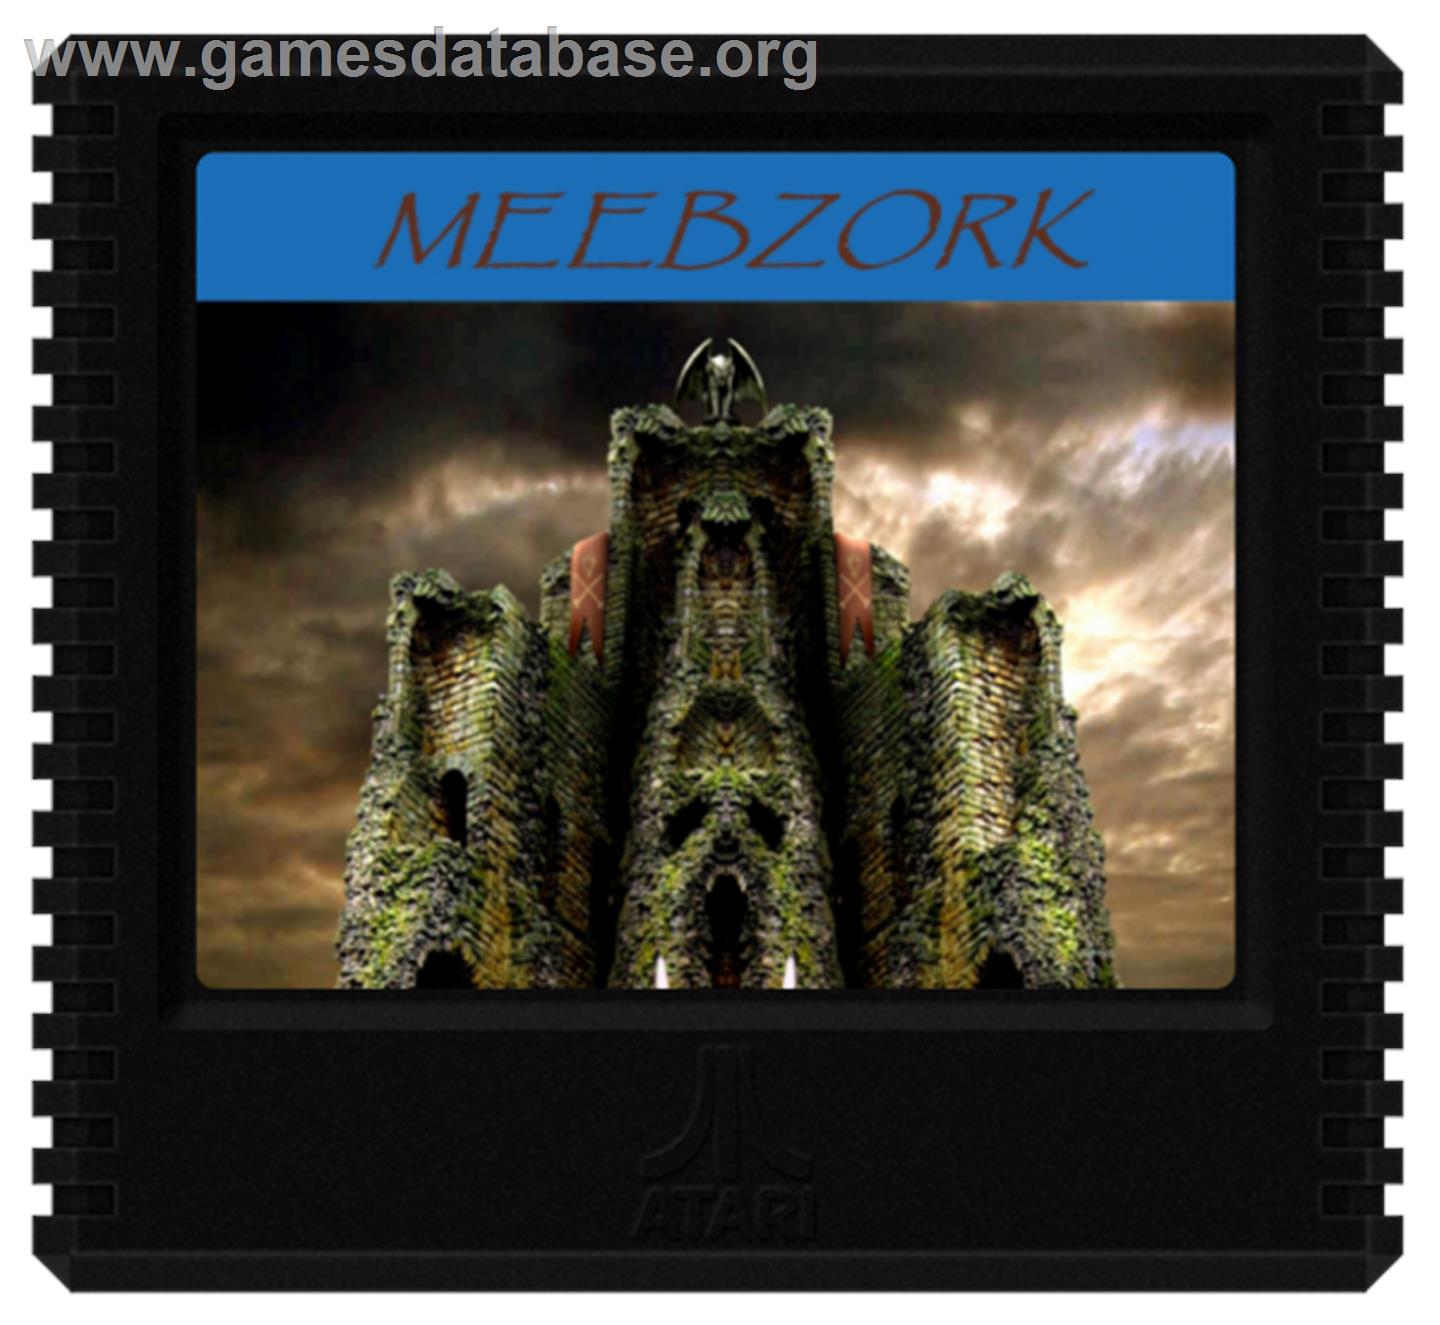 Meebzork - Atari 5200 - Artwork - Cartridge